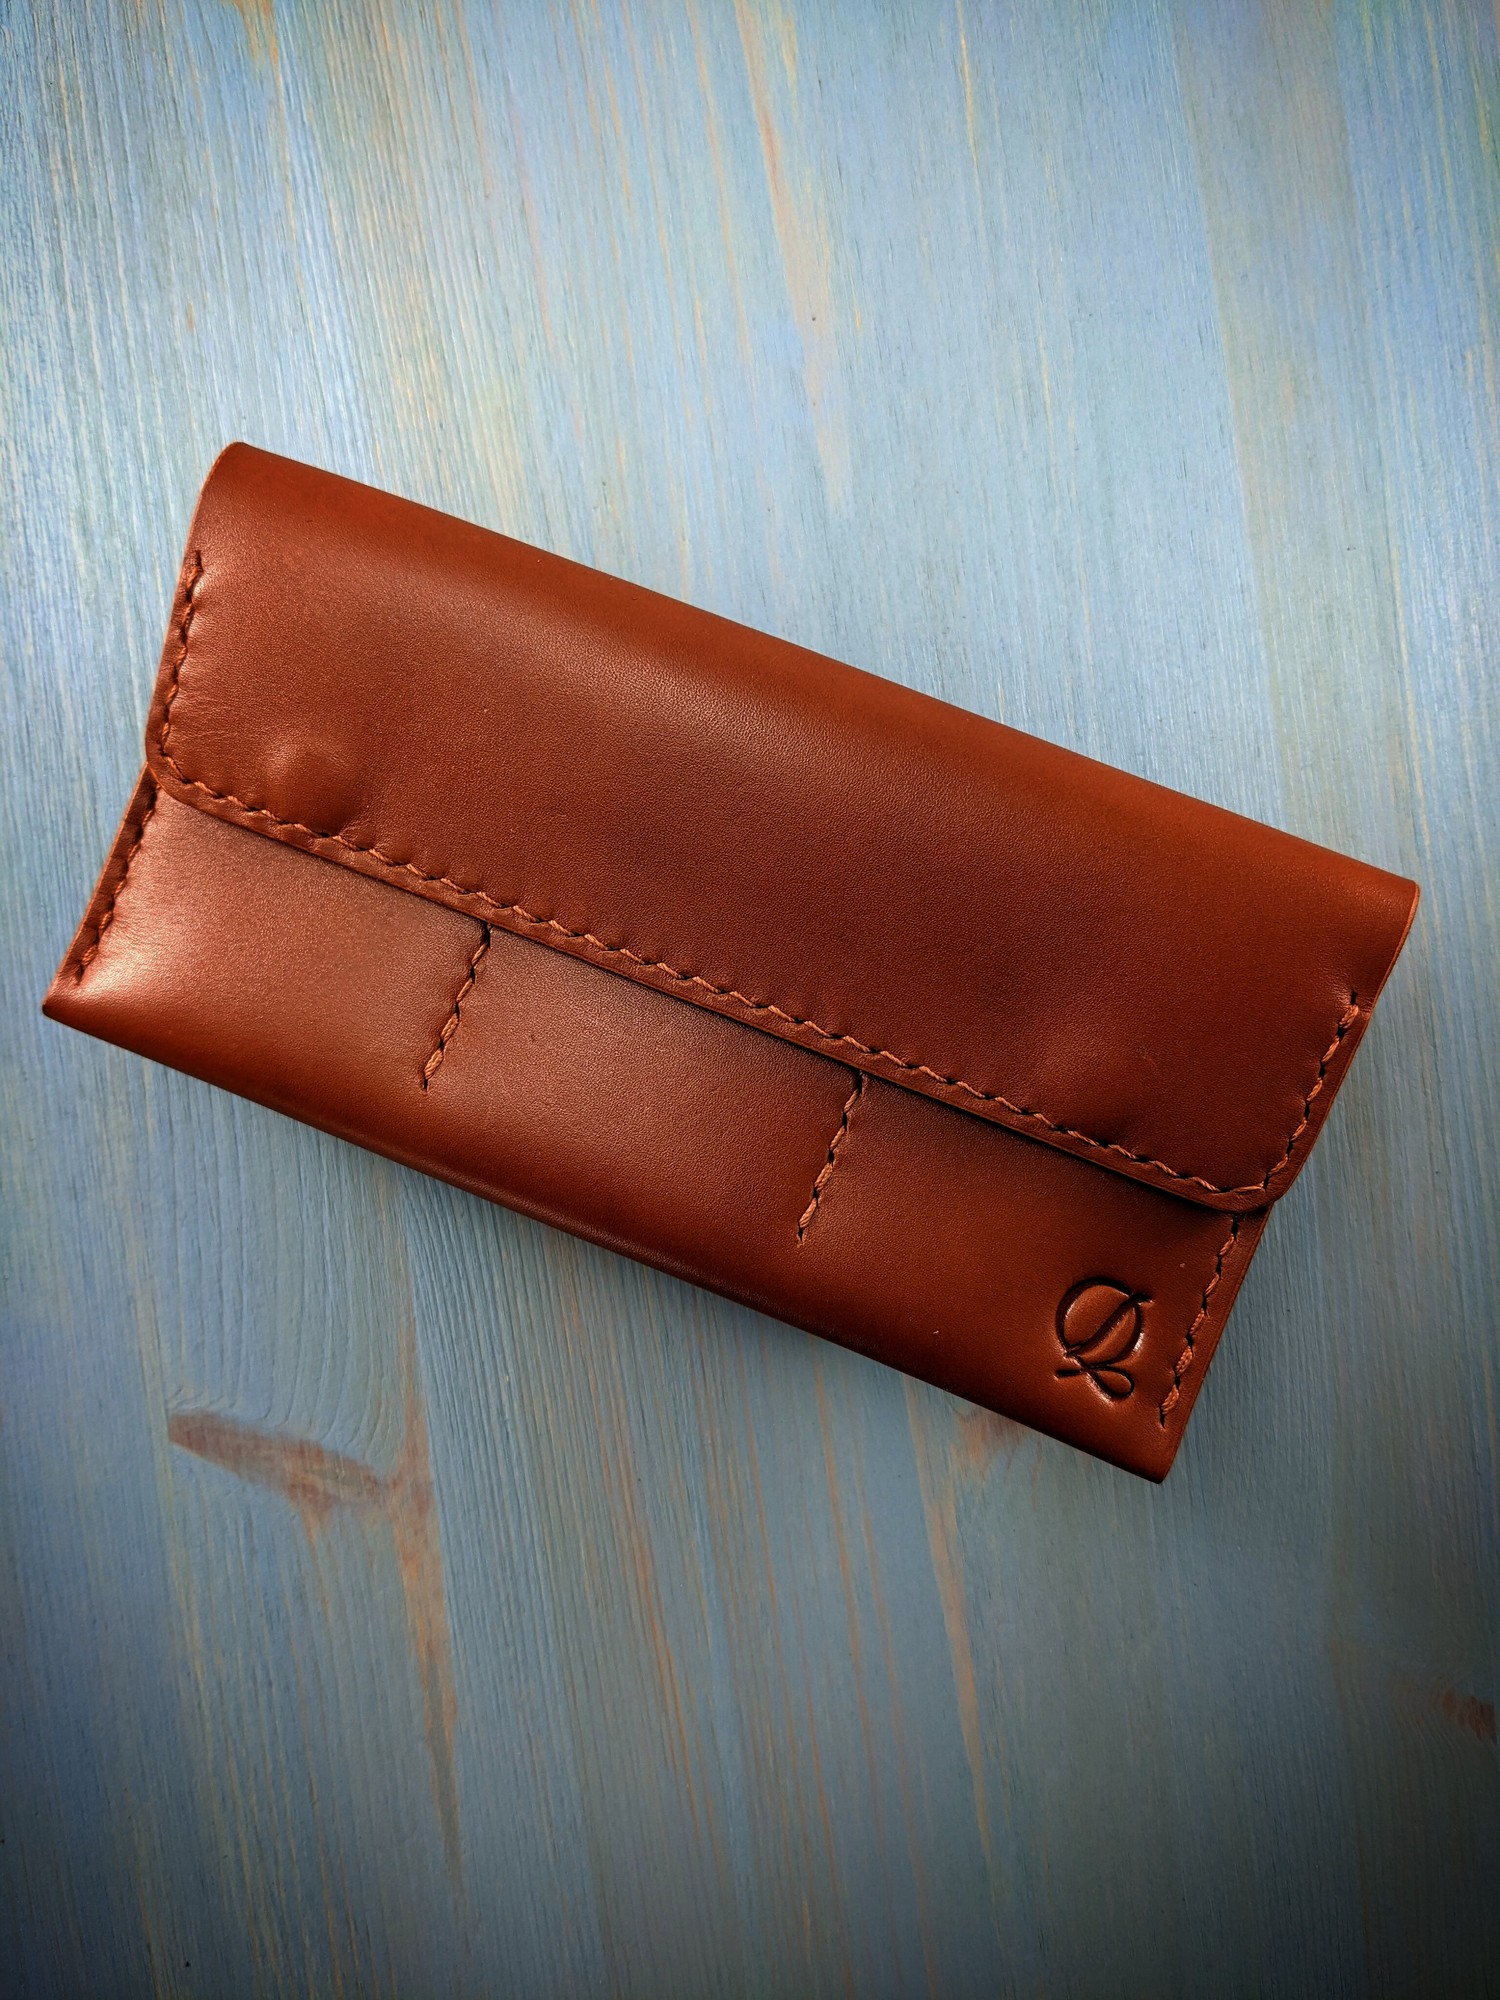 Long wallet, purse, portmone, handmade, made of genuine leather, cognac color